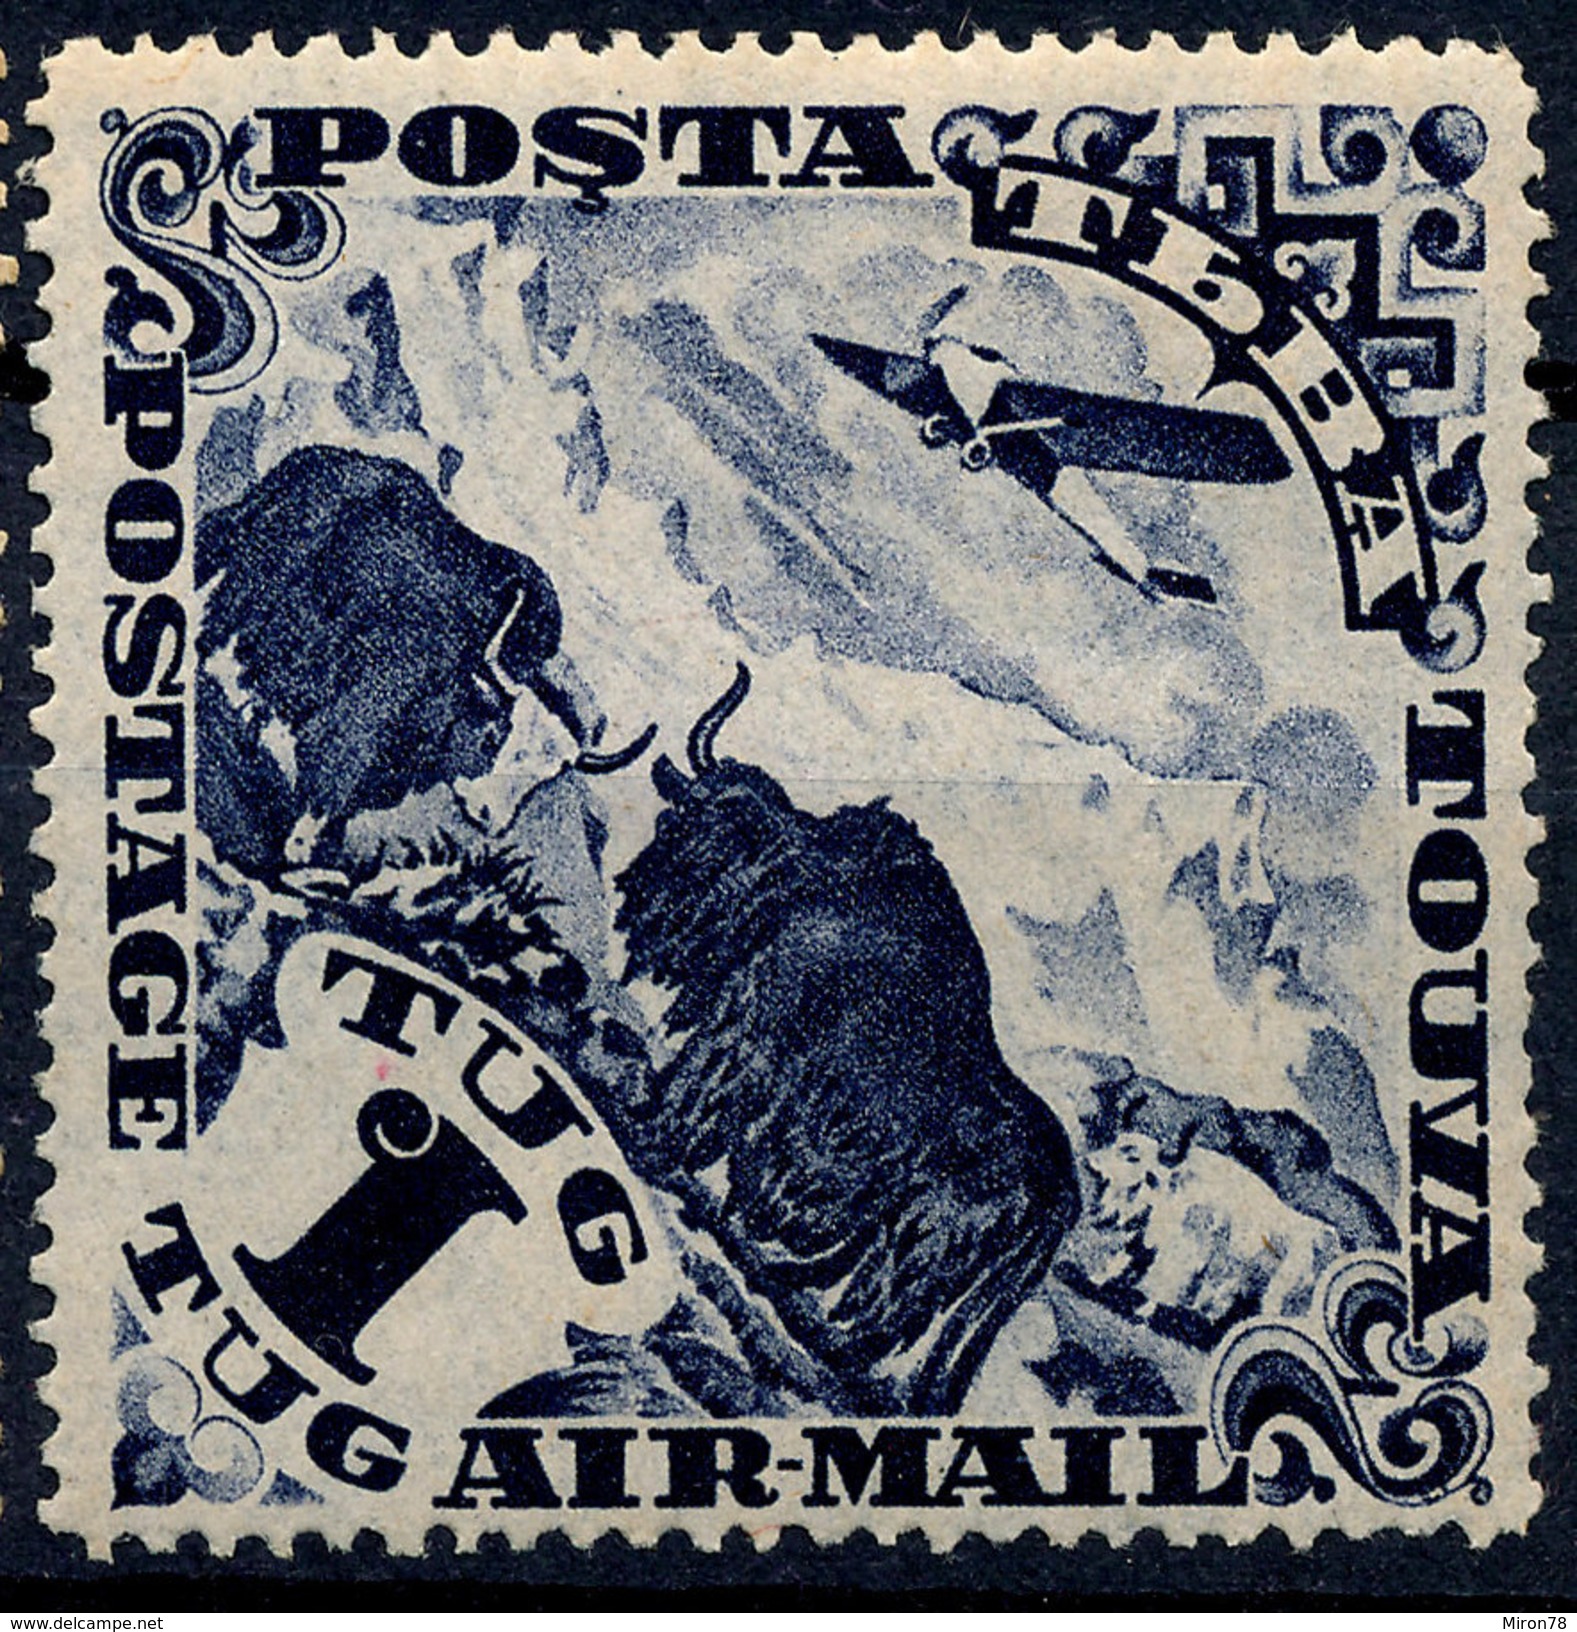 Stamp Tannu Tuva 1934 Mint Lot#20 - Touva